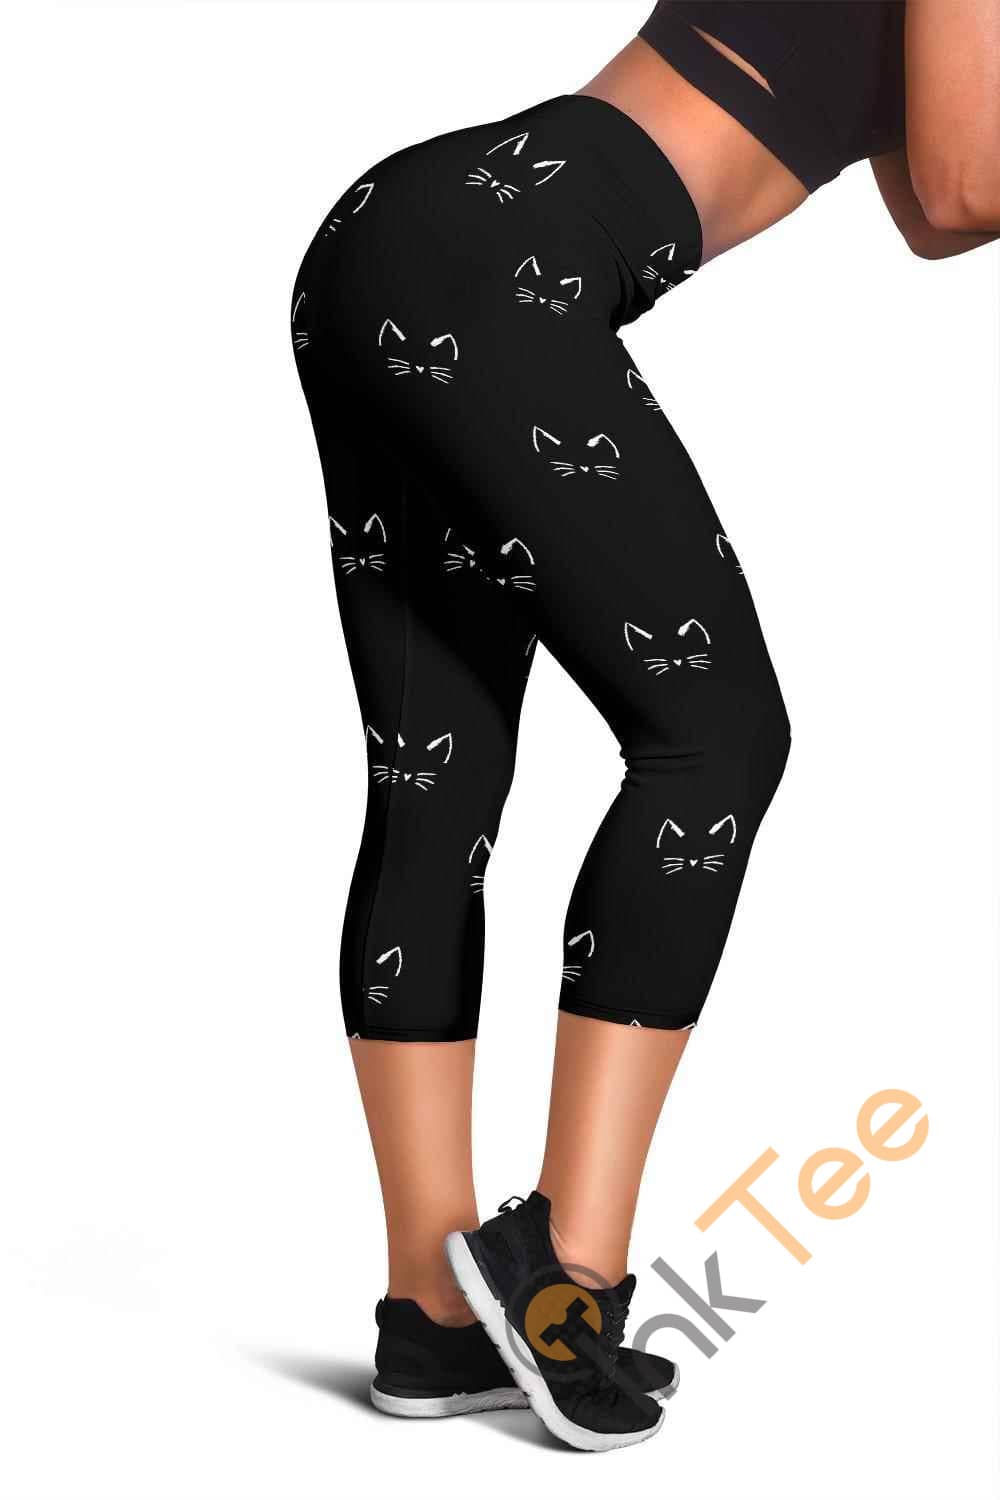 Inktee Store - Ultimate Cat Lovers Capri 3D All Over Print For Yoga Fitness Women'S Capris Image